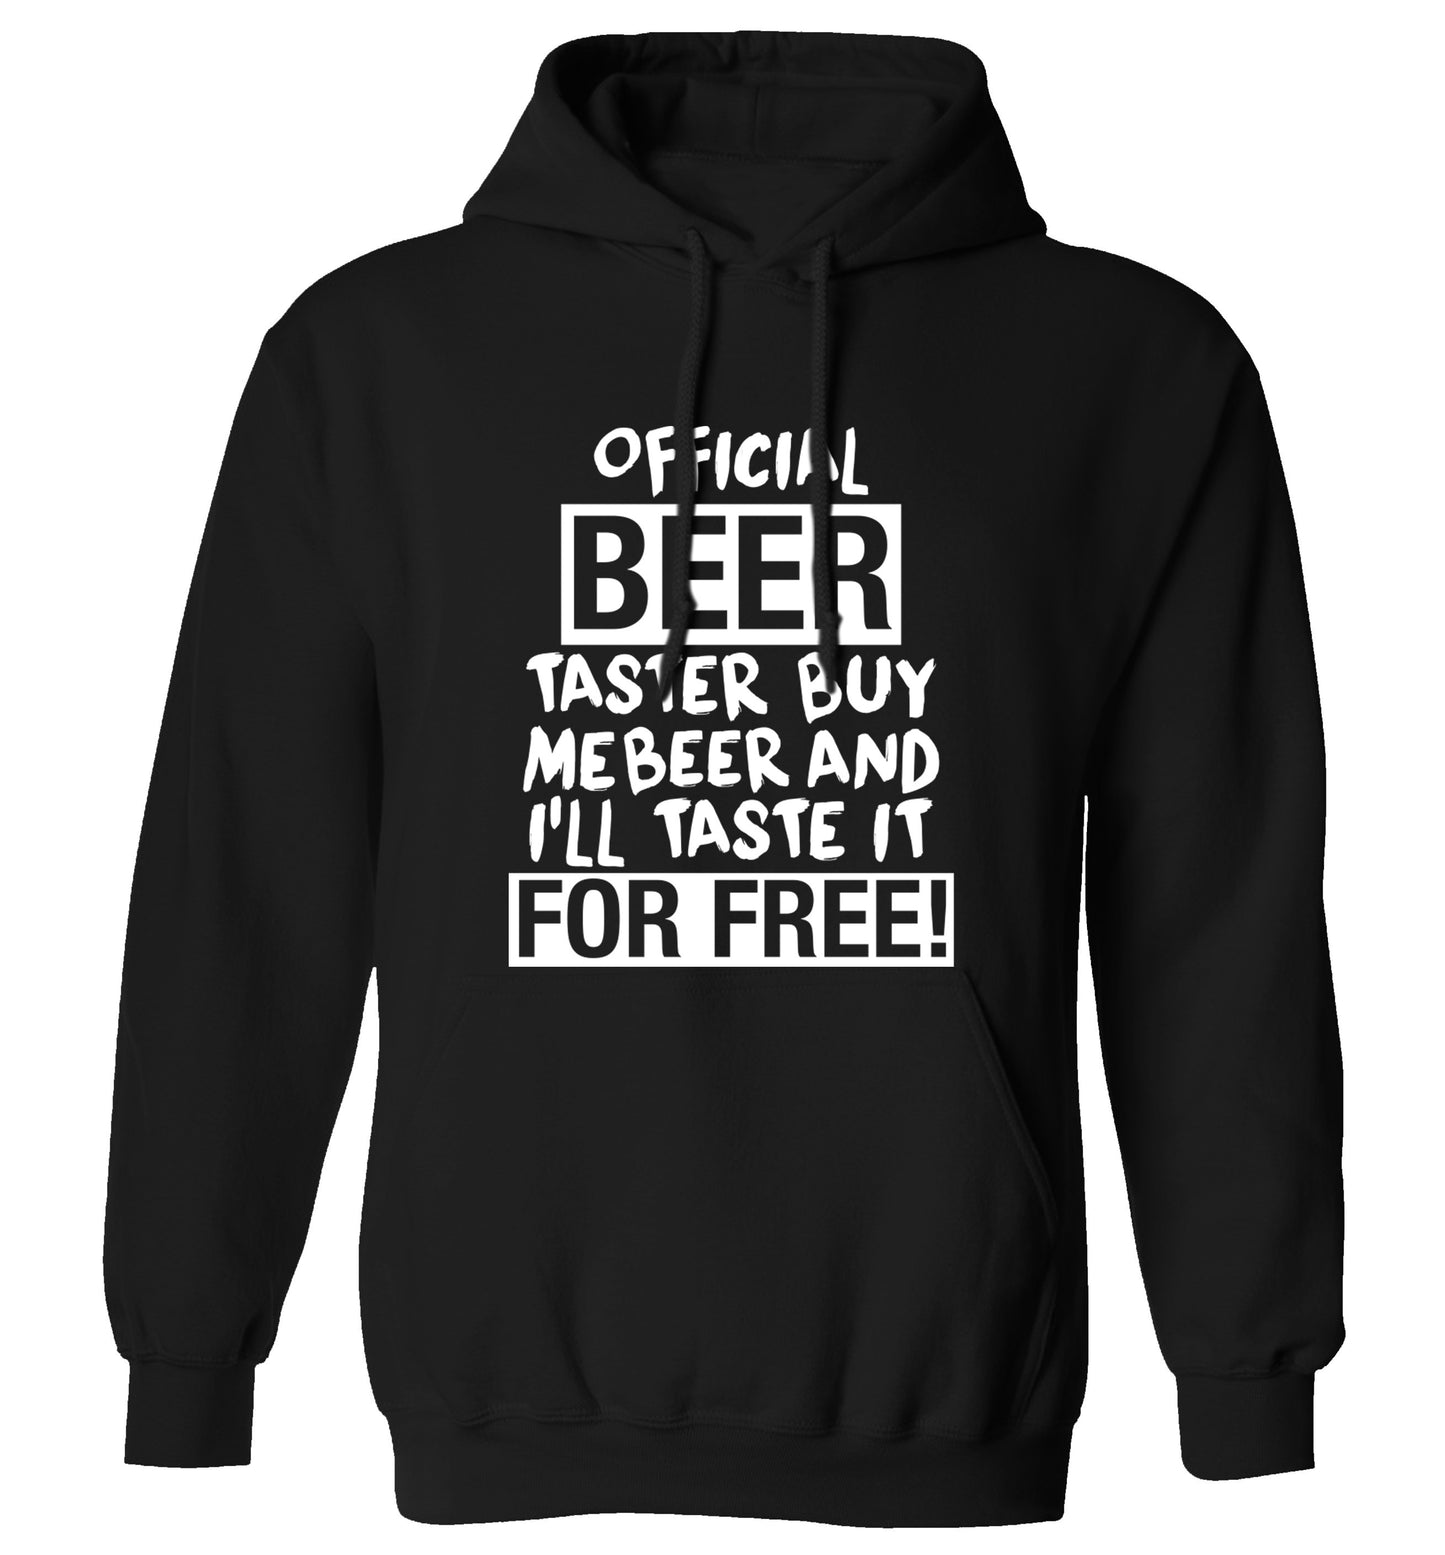 Official beer taster buy me beer and I'll taste it for free! adults unisex black hoodie 2XL